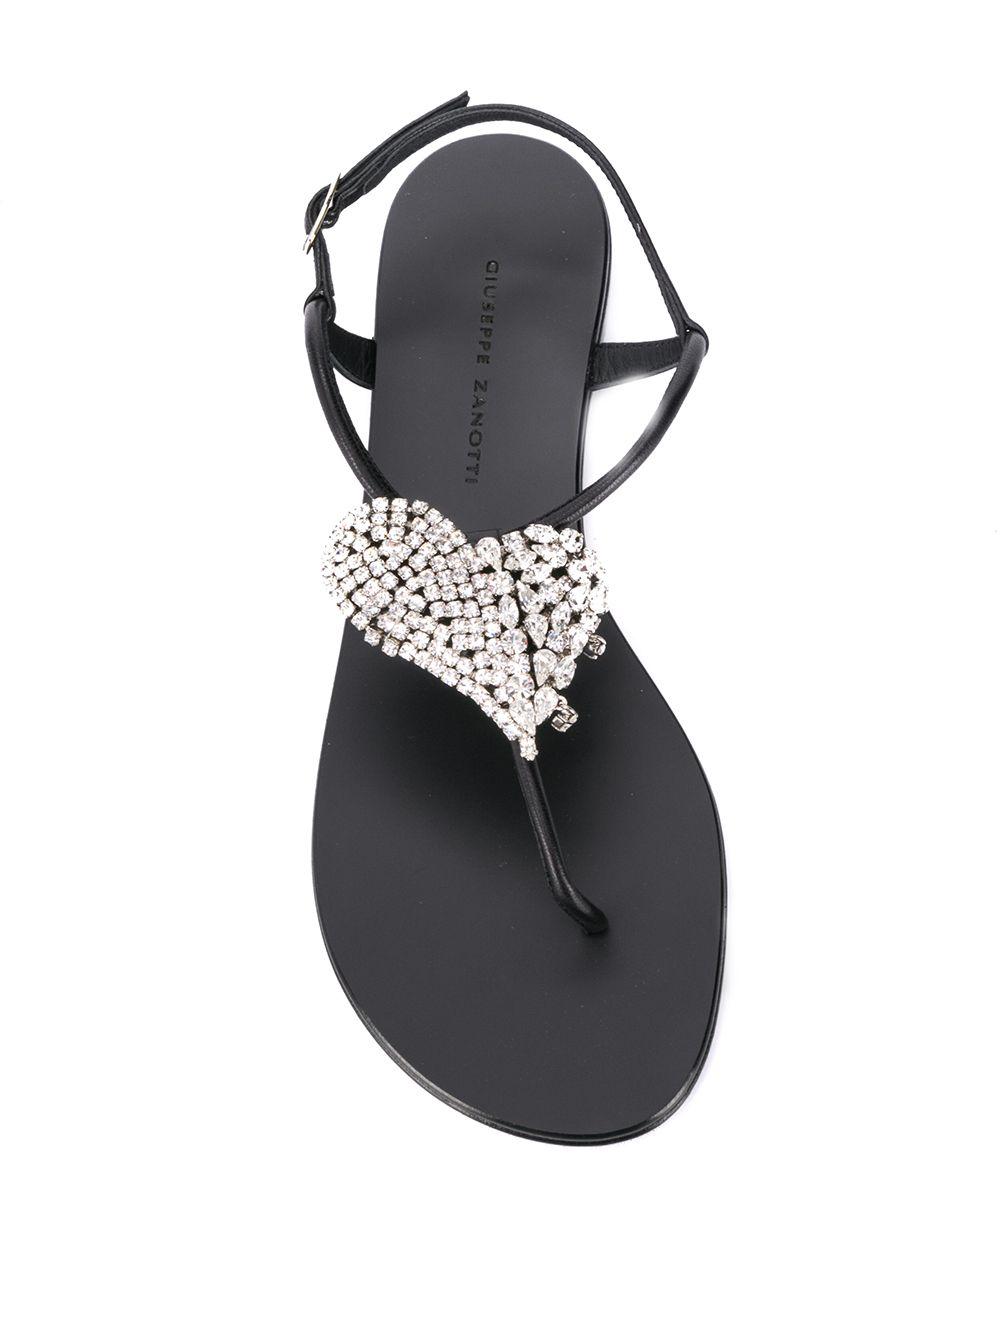 Giuseppe Zanotti Leather Crystal Embellished Flat Sandals in Black - Lyst